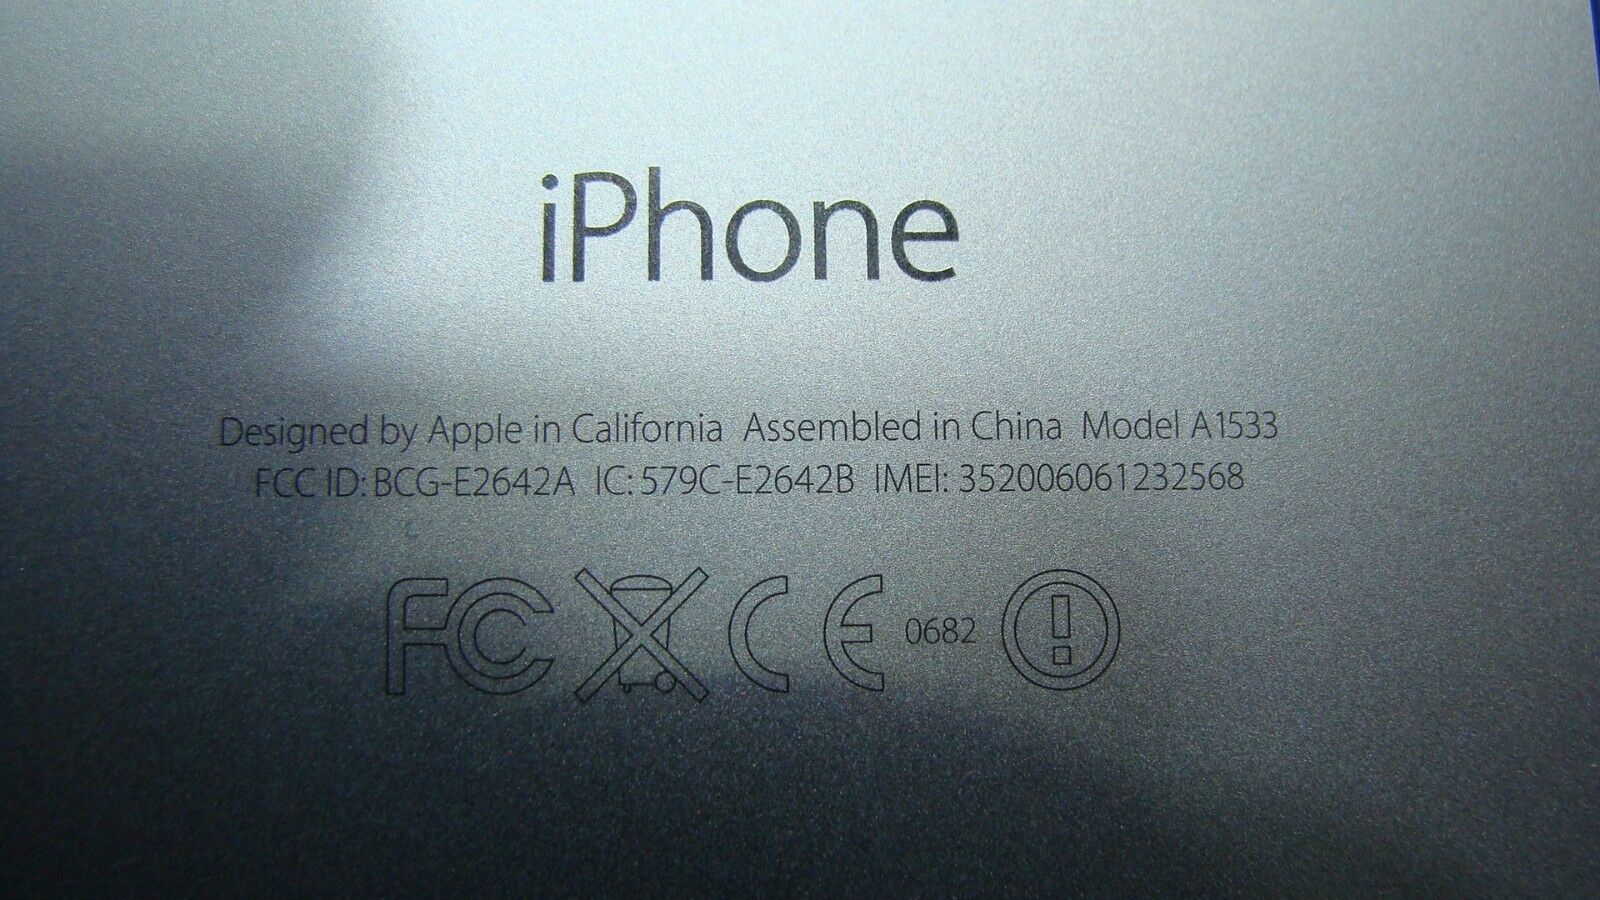 iPhone 5s Verizon A1533 ME341LL/A Late 2013 4